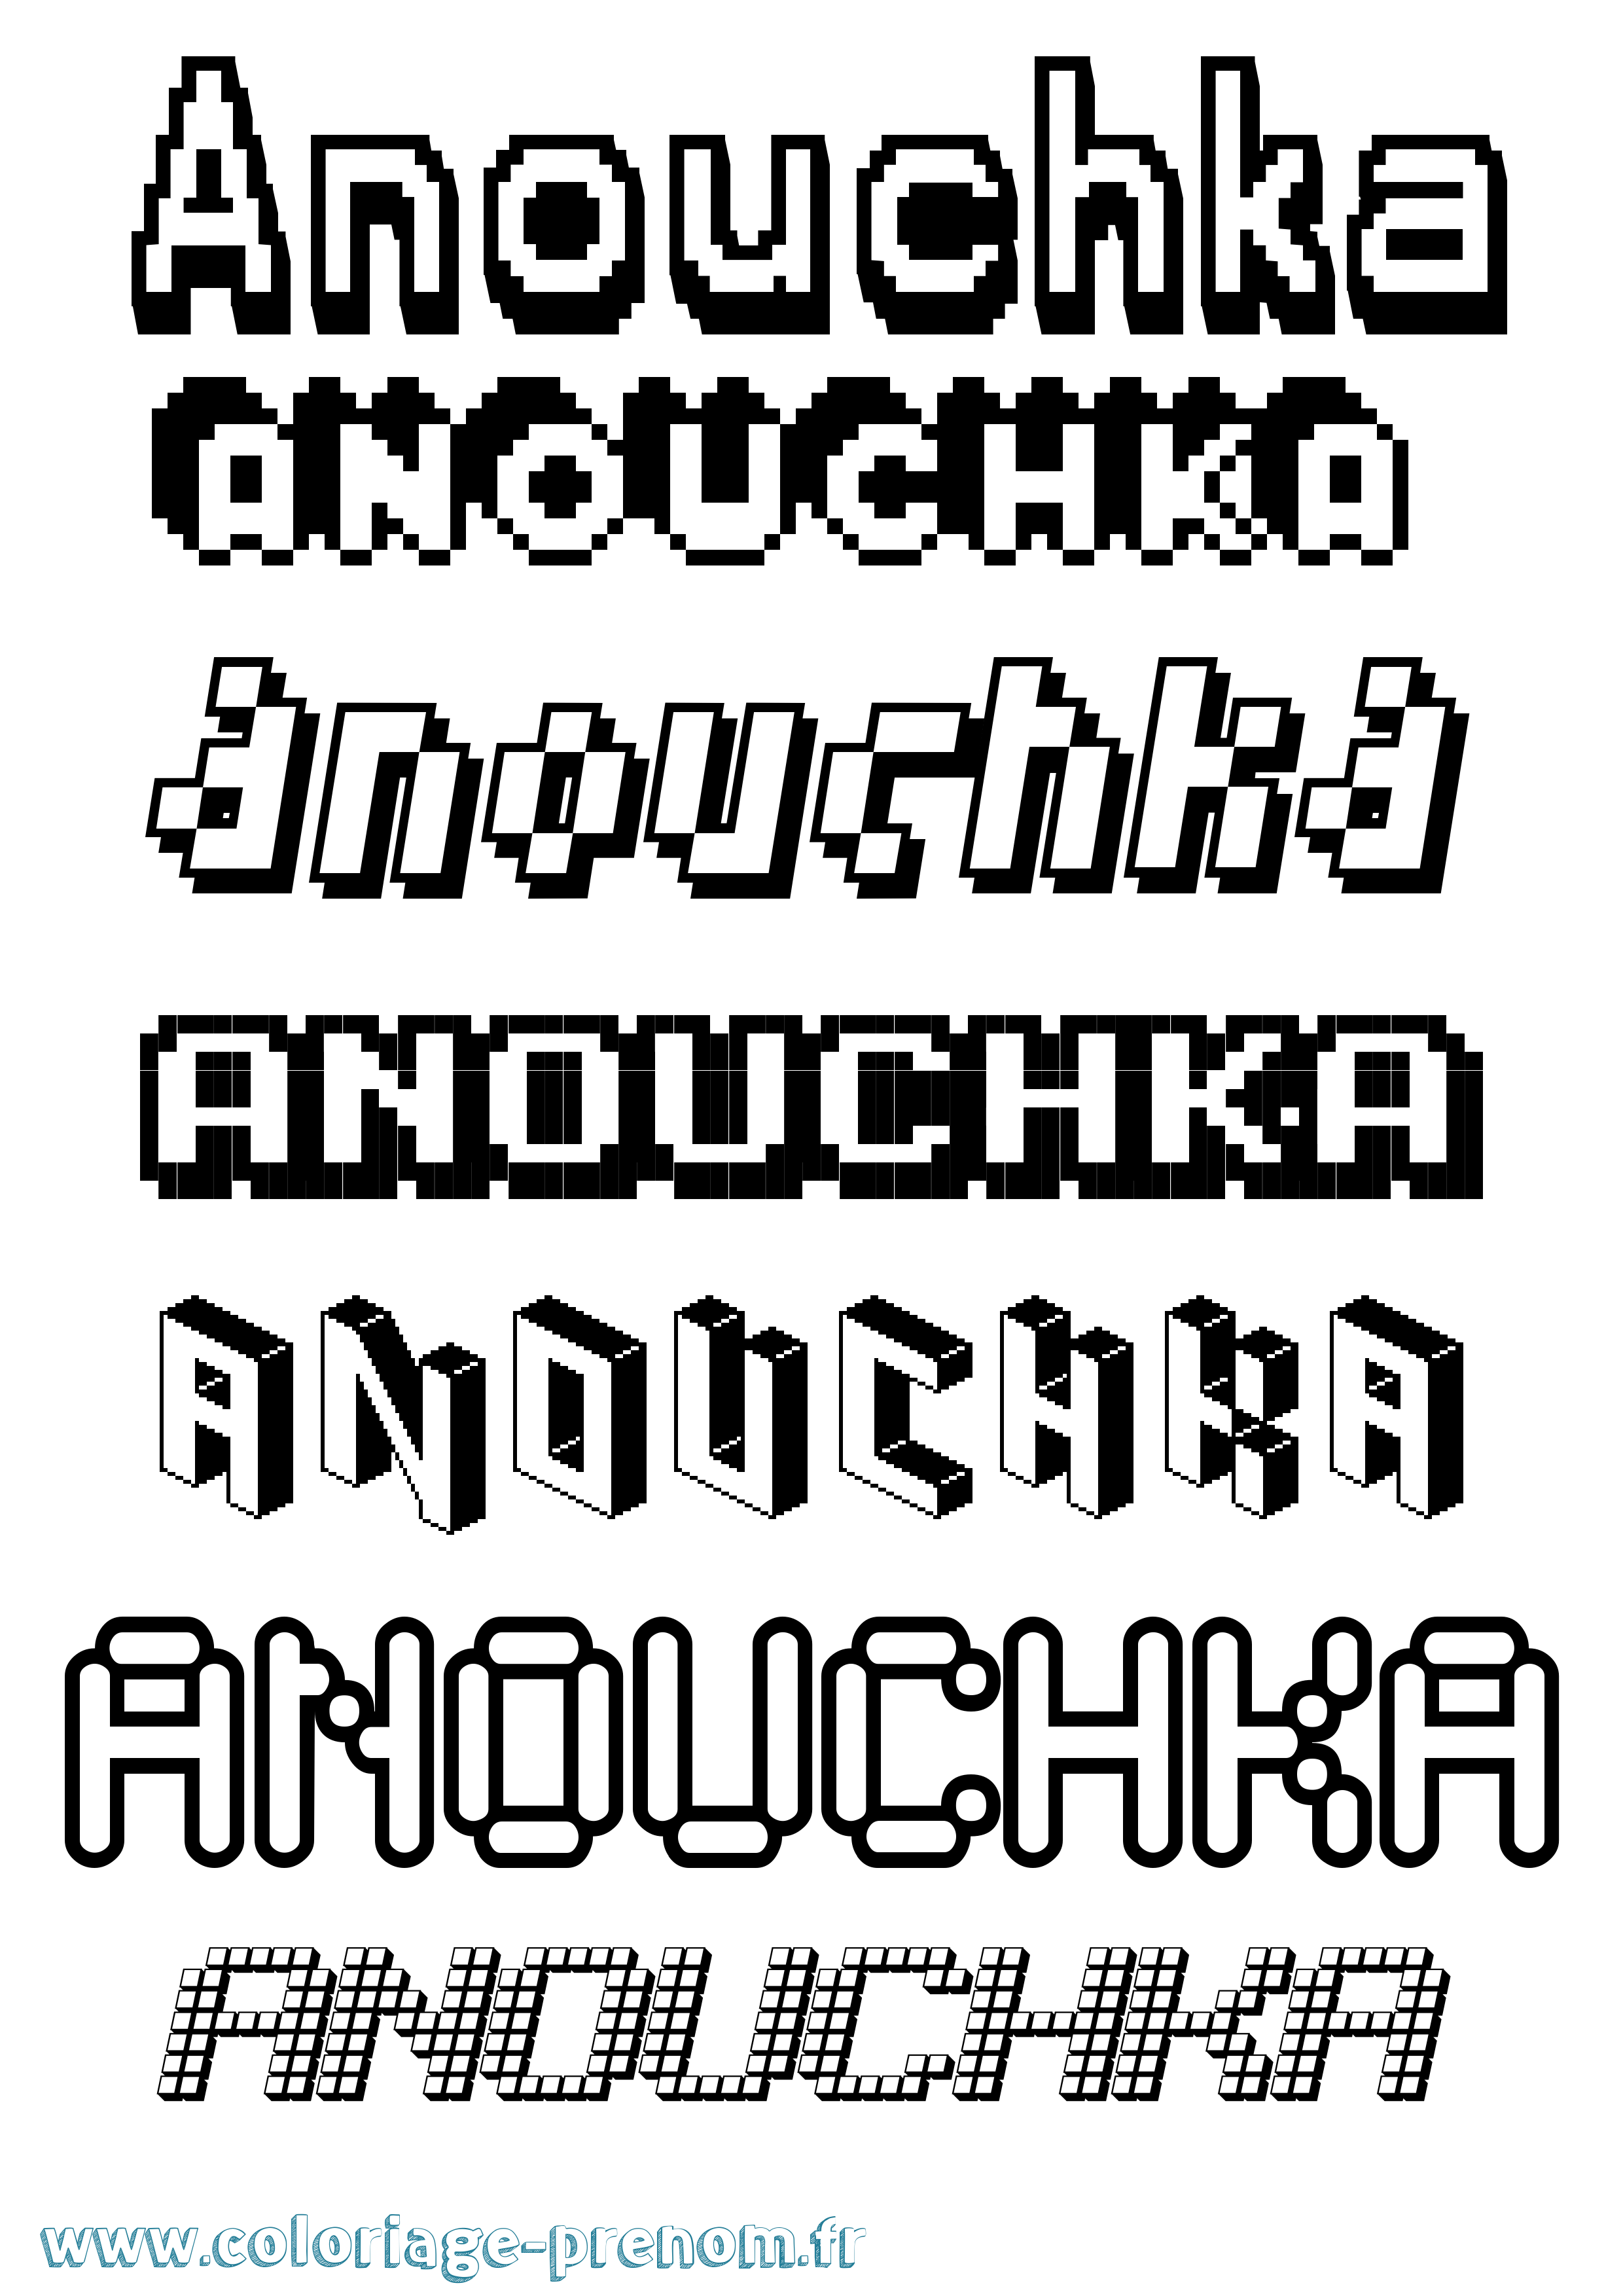 Coloriage prénom Anouchka Pixel